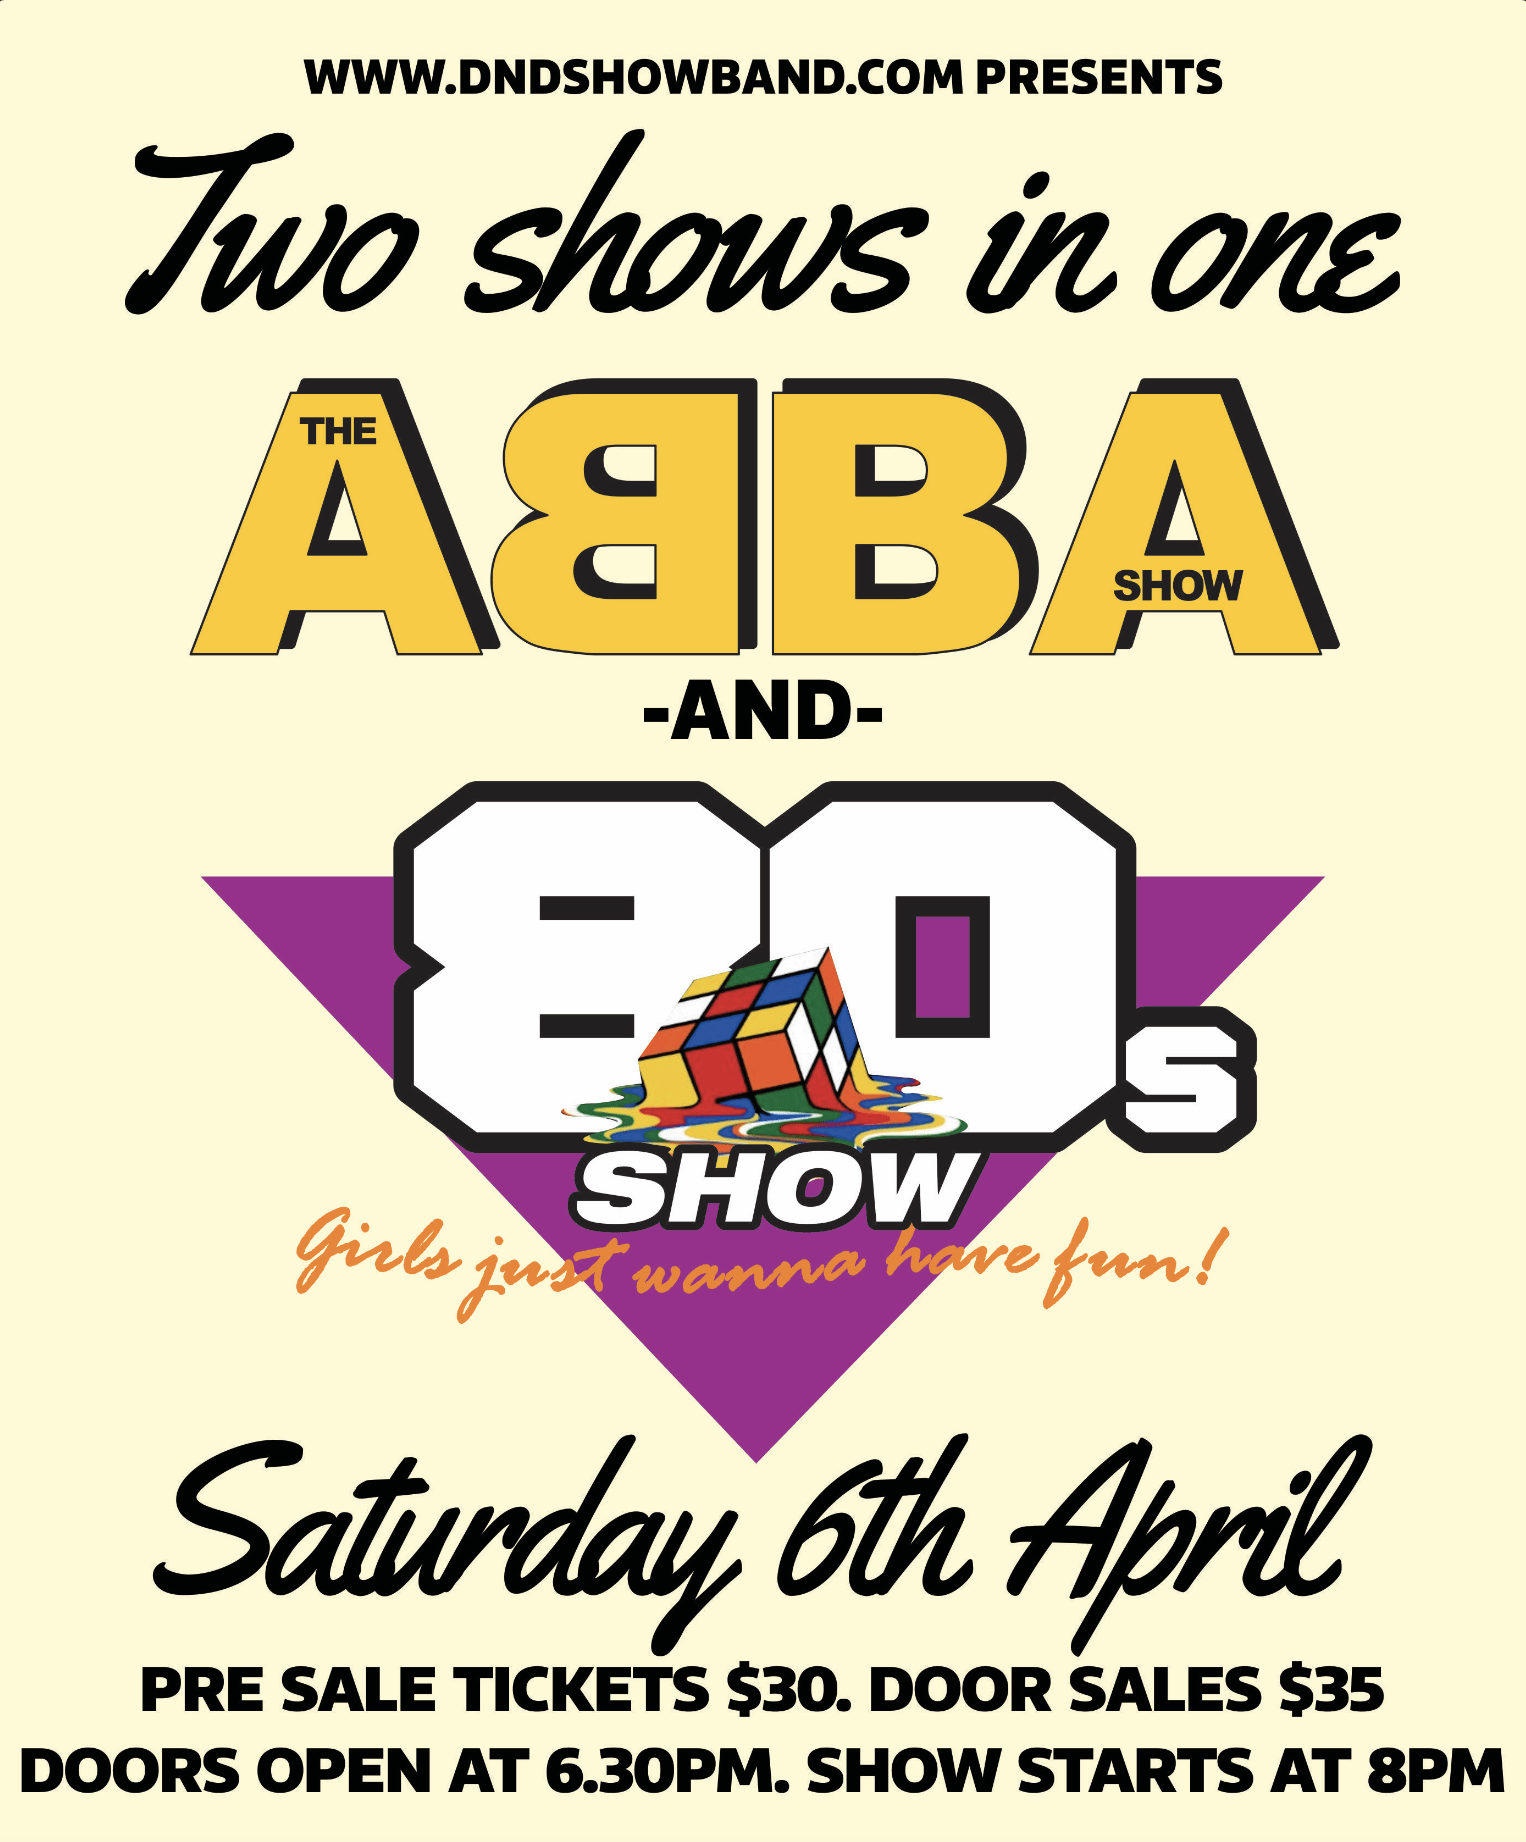 Abba 80s show